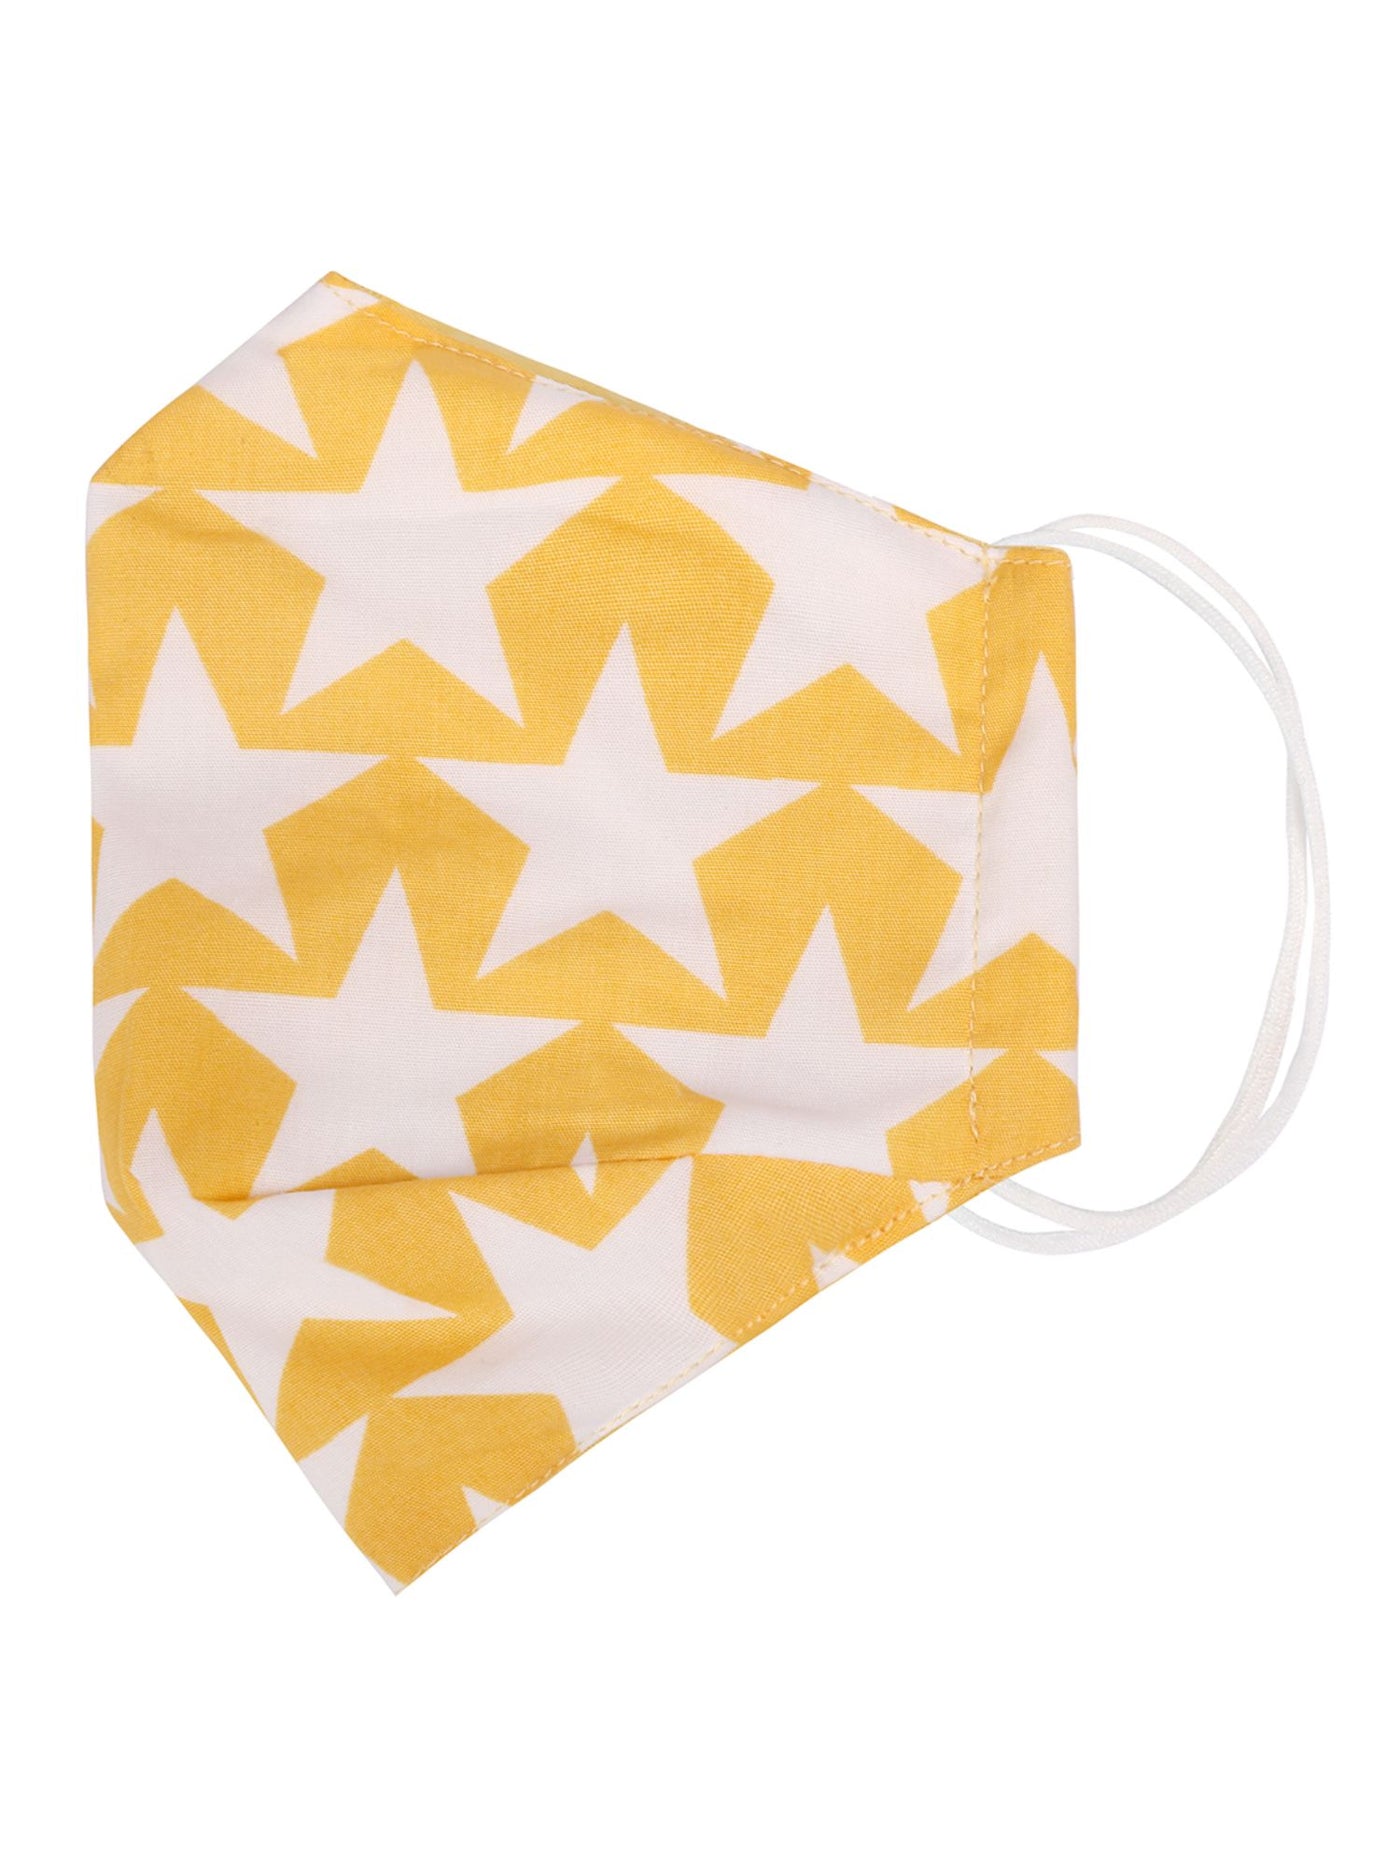 Star (Yellow) Mask